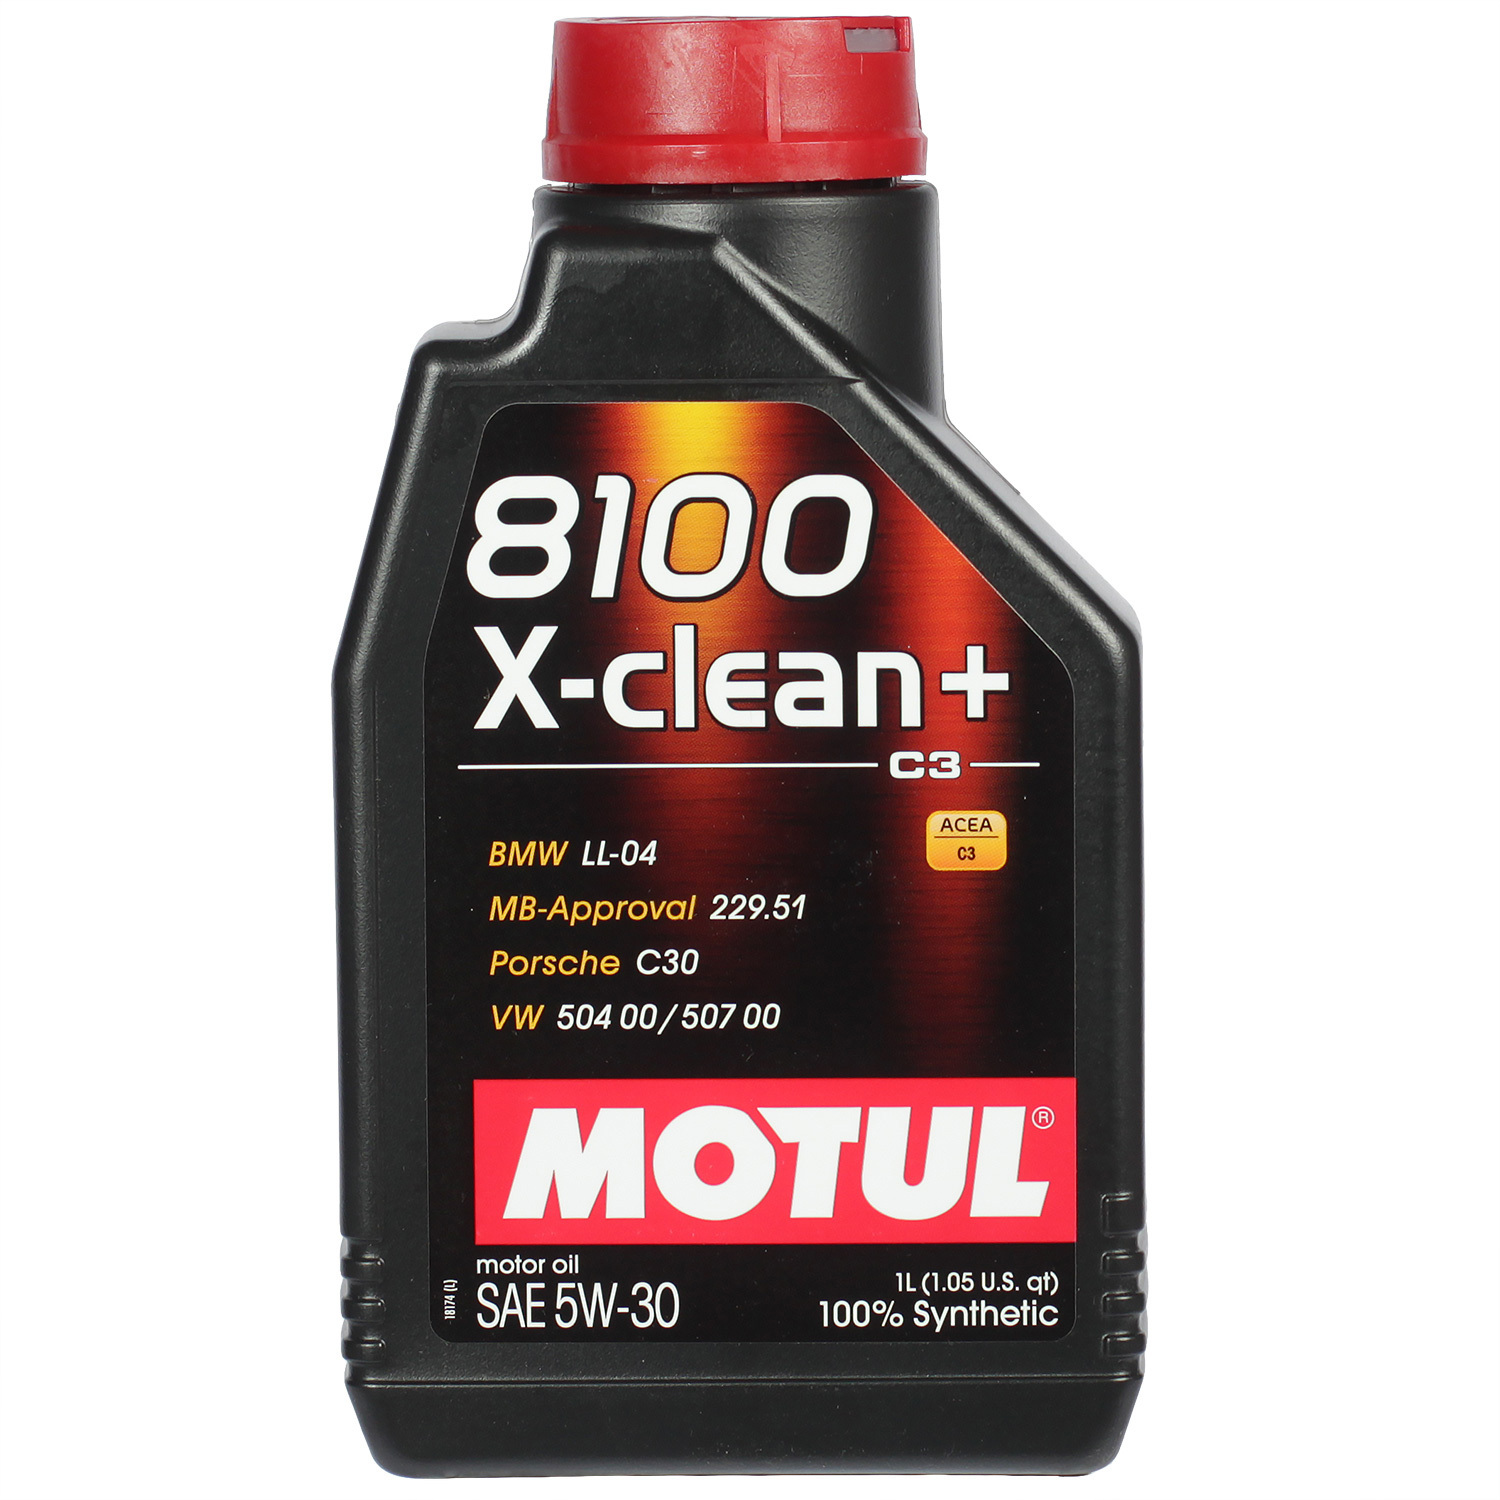 Motul Моторное масло Motul 8100 X-clean+ 5W-30, 1 л